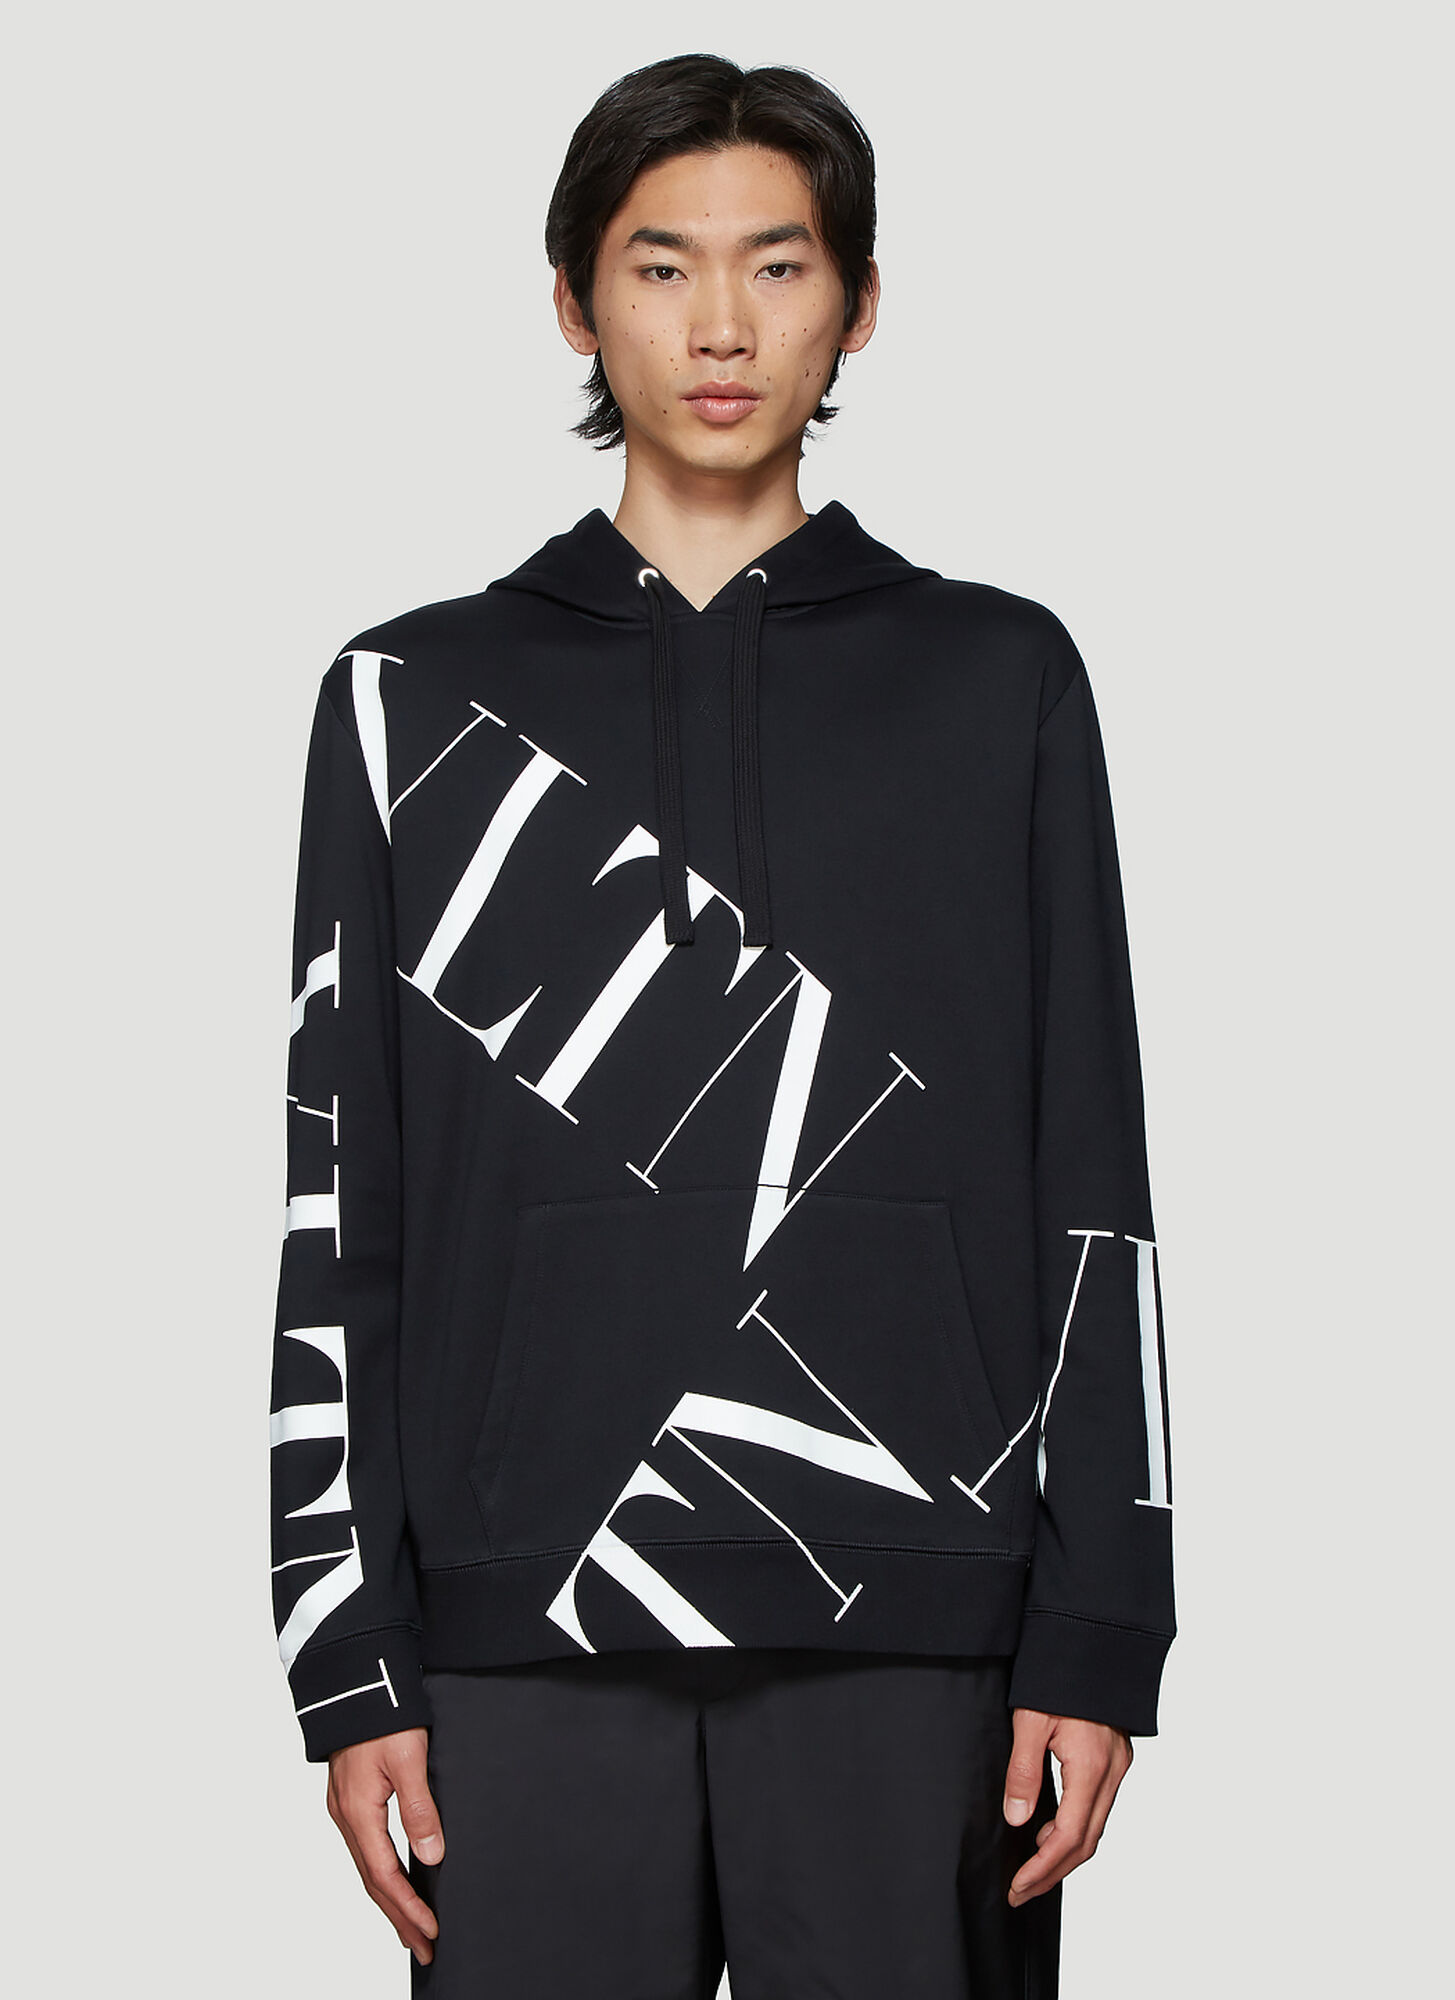 Valentino VLTN Logo Hooded Sweatshirt in Black size M | The Fashionisto